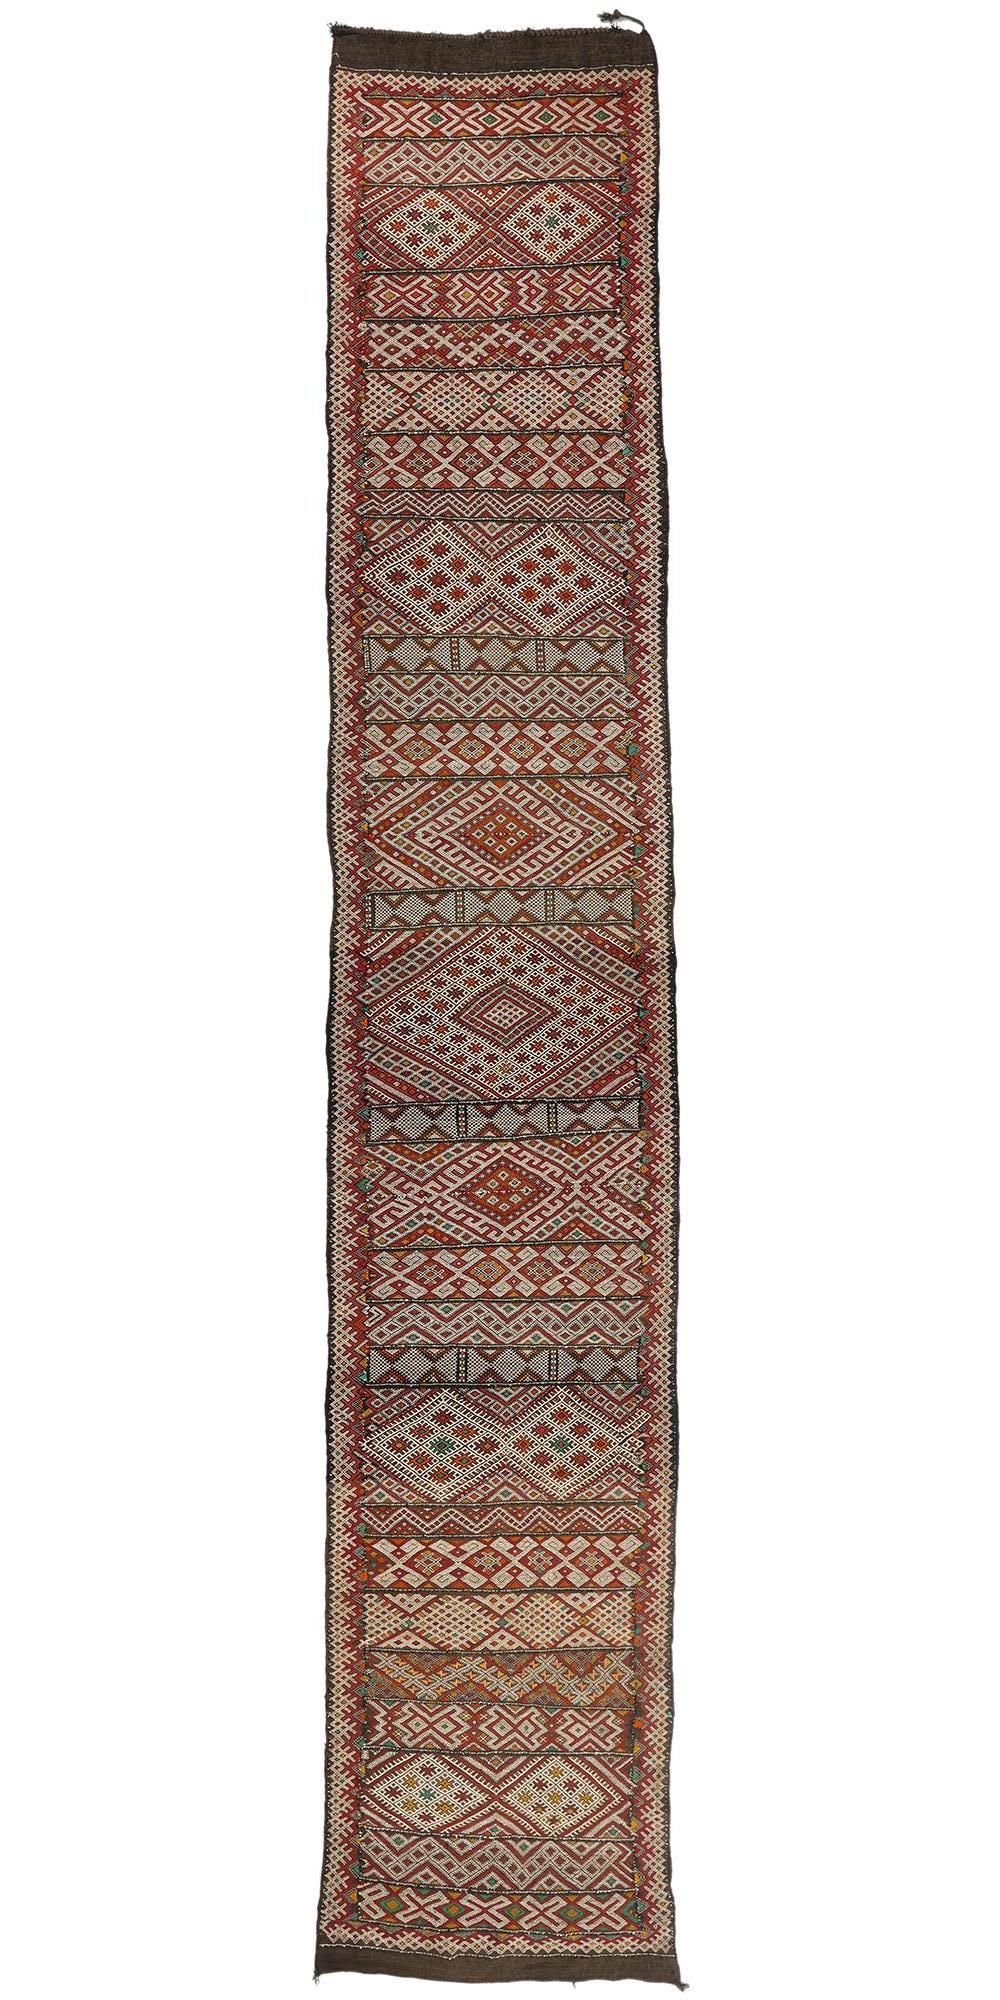 Vintage Zemmour Moroccan Flatweave Carpet, 03'10 x 21'06 For Sale